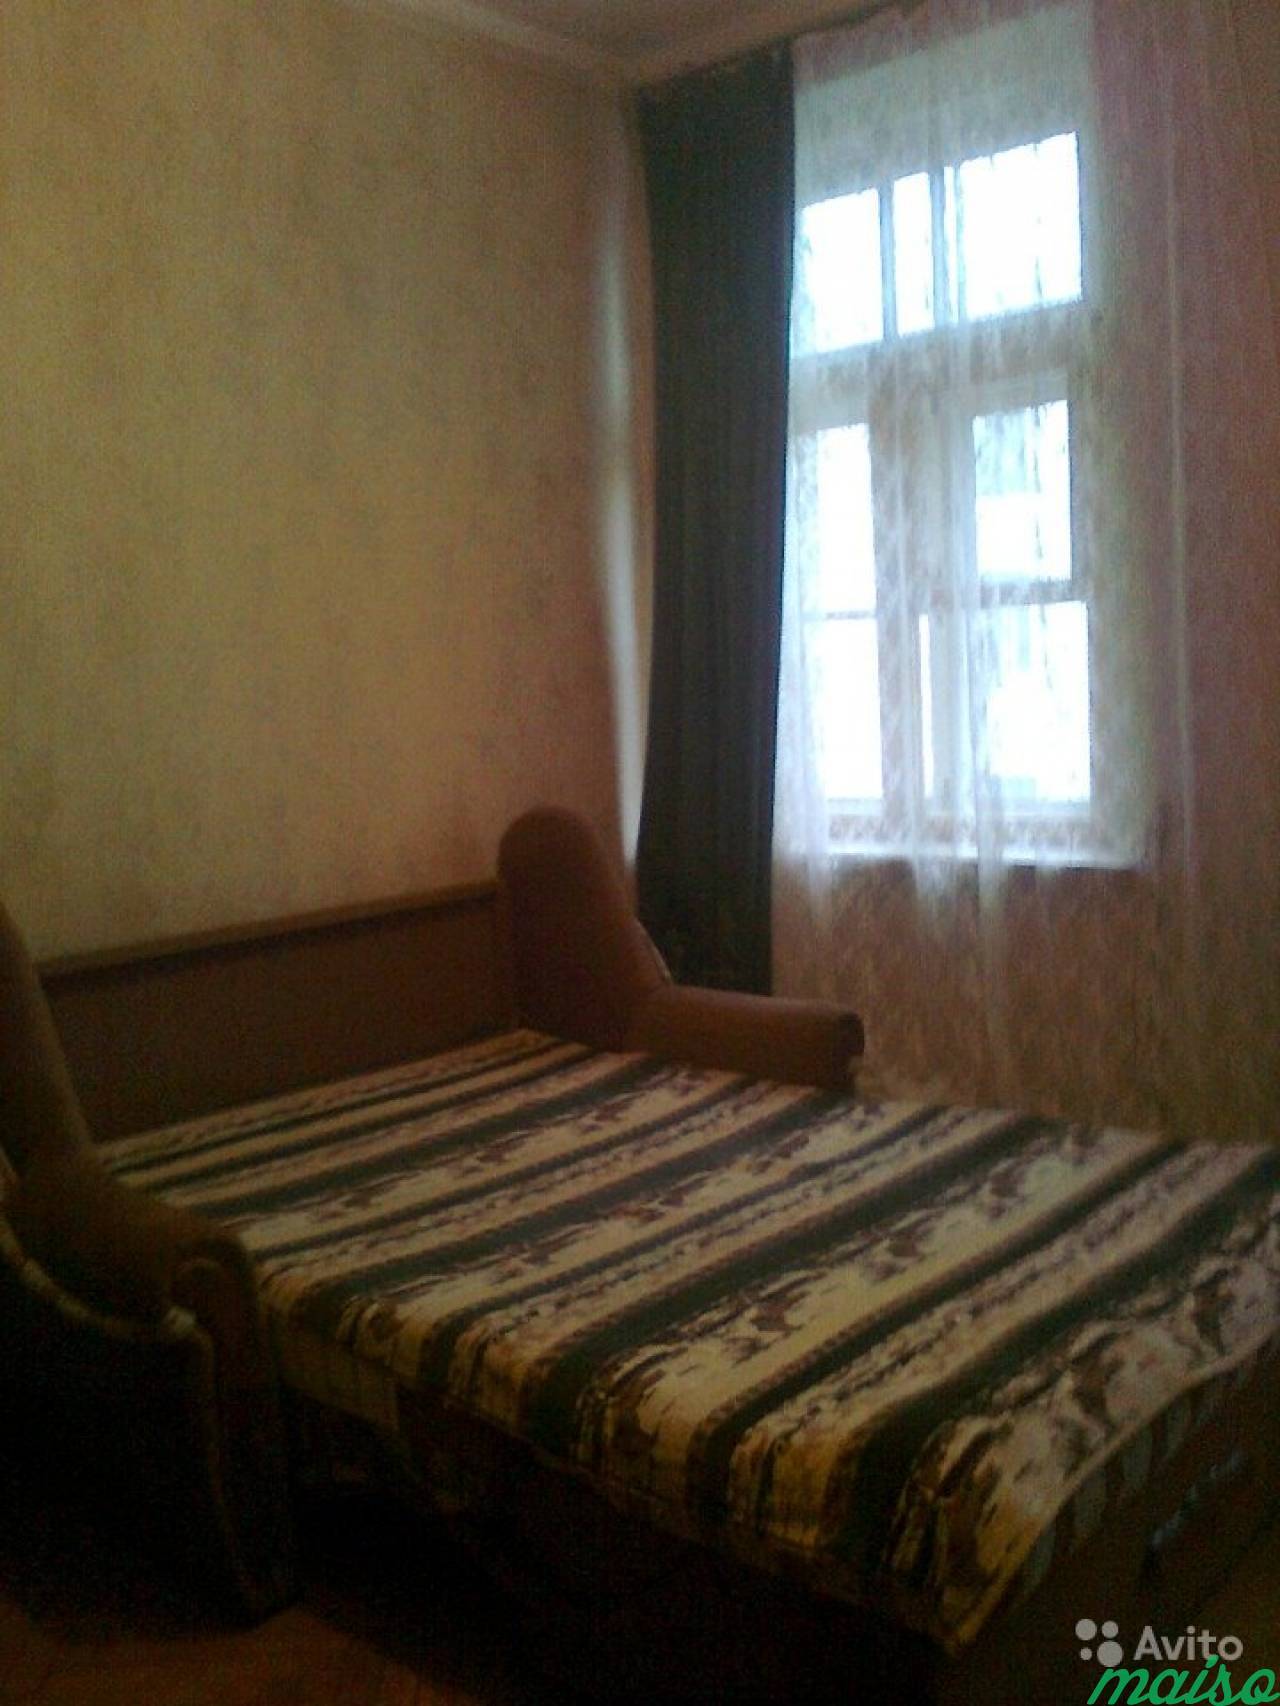 Комната 20 м² в 3-к, 4/5 эт. в Санкт-Петербурге. Фото 1